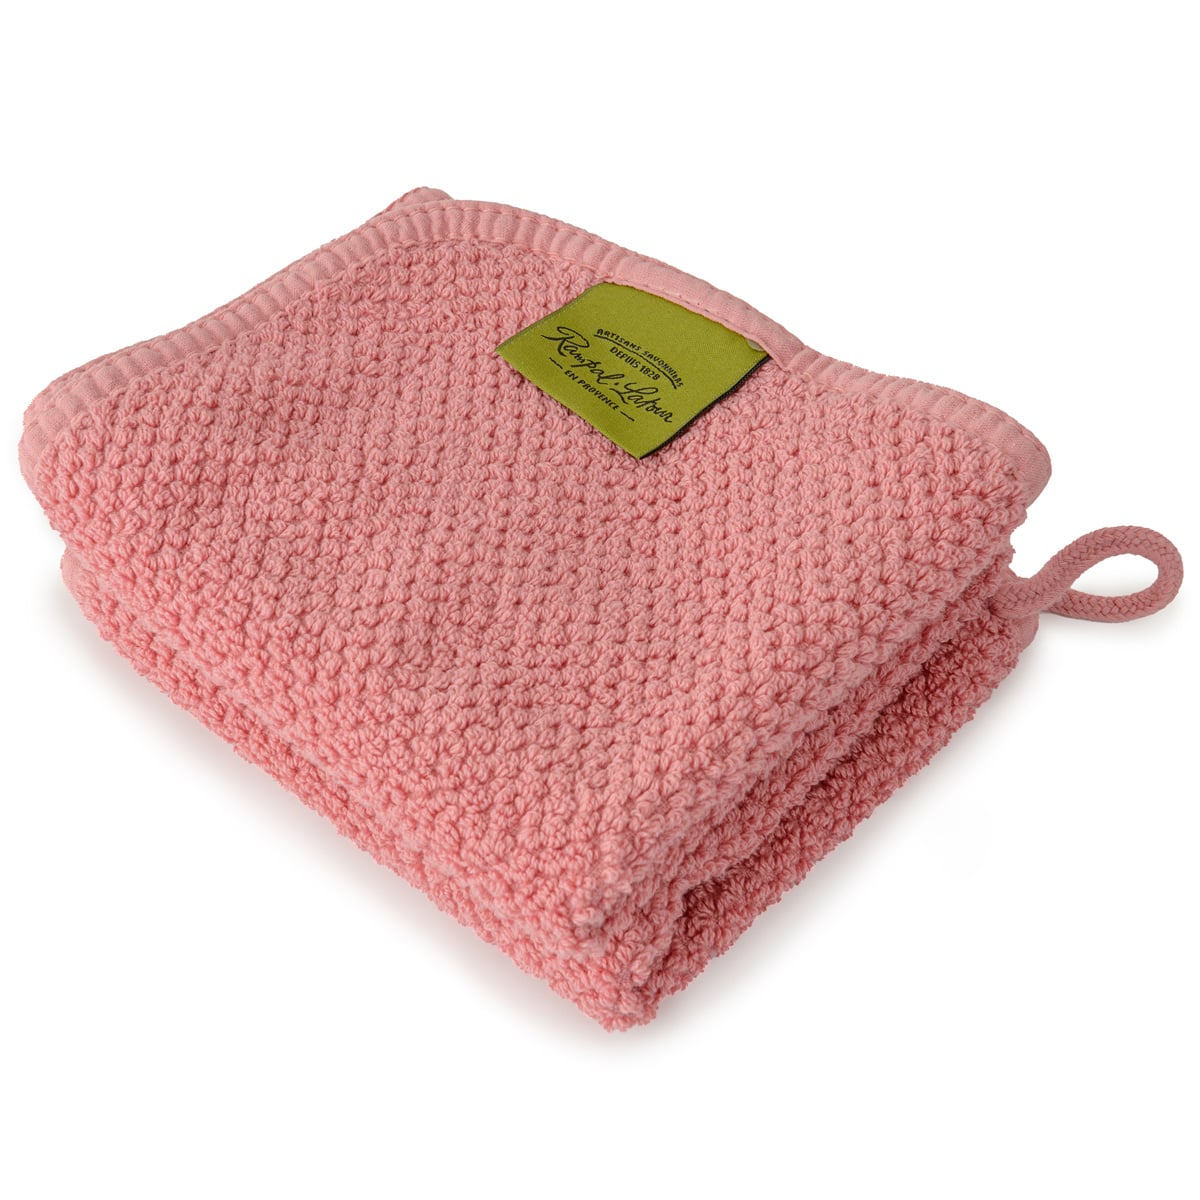 Hand towel 30x50cm Powder pink